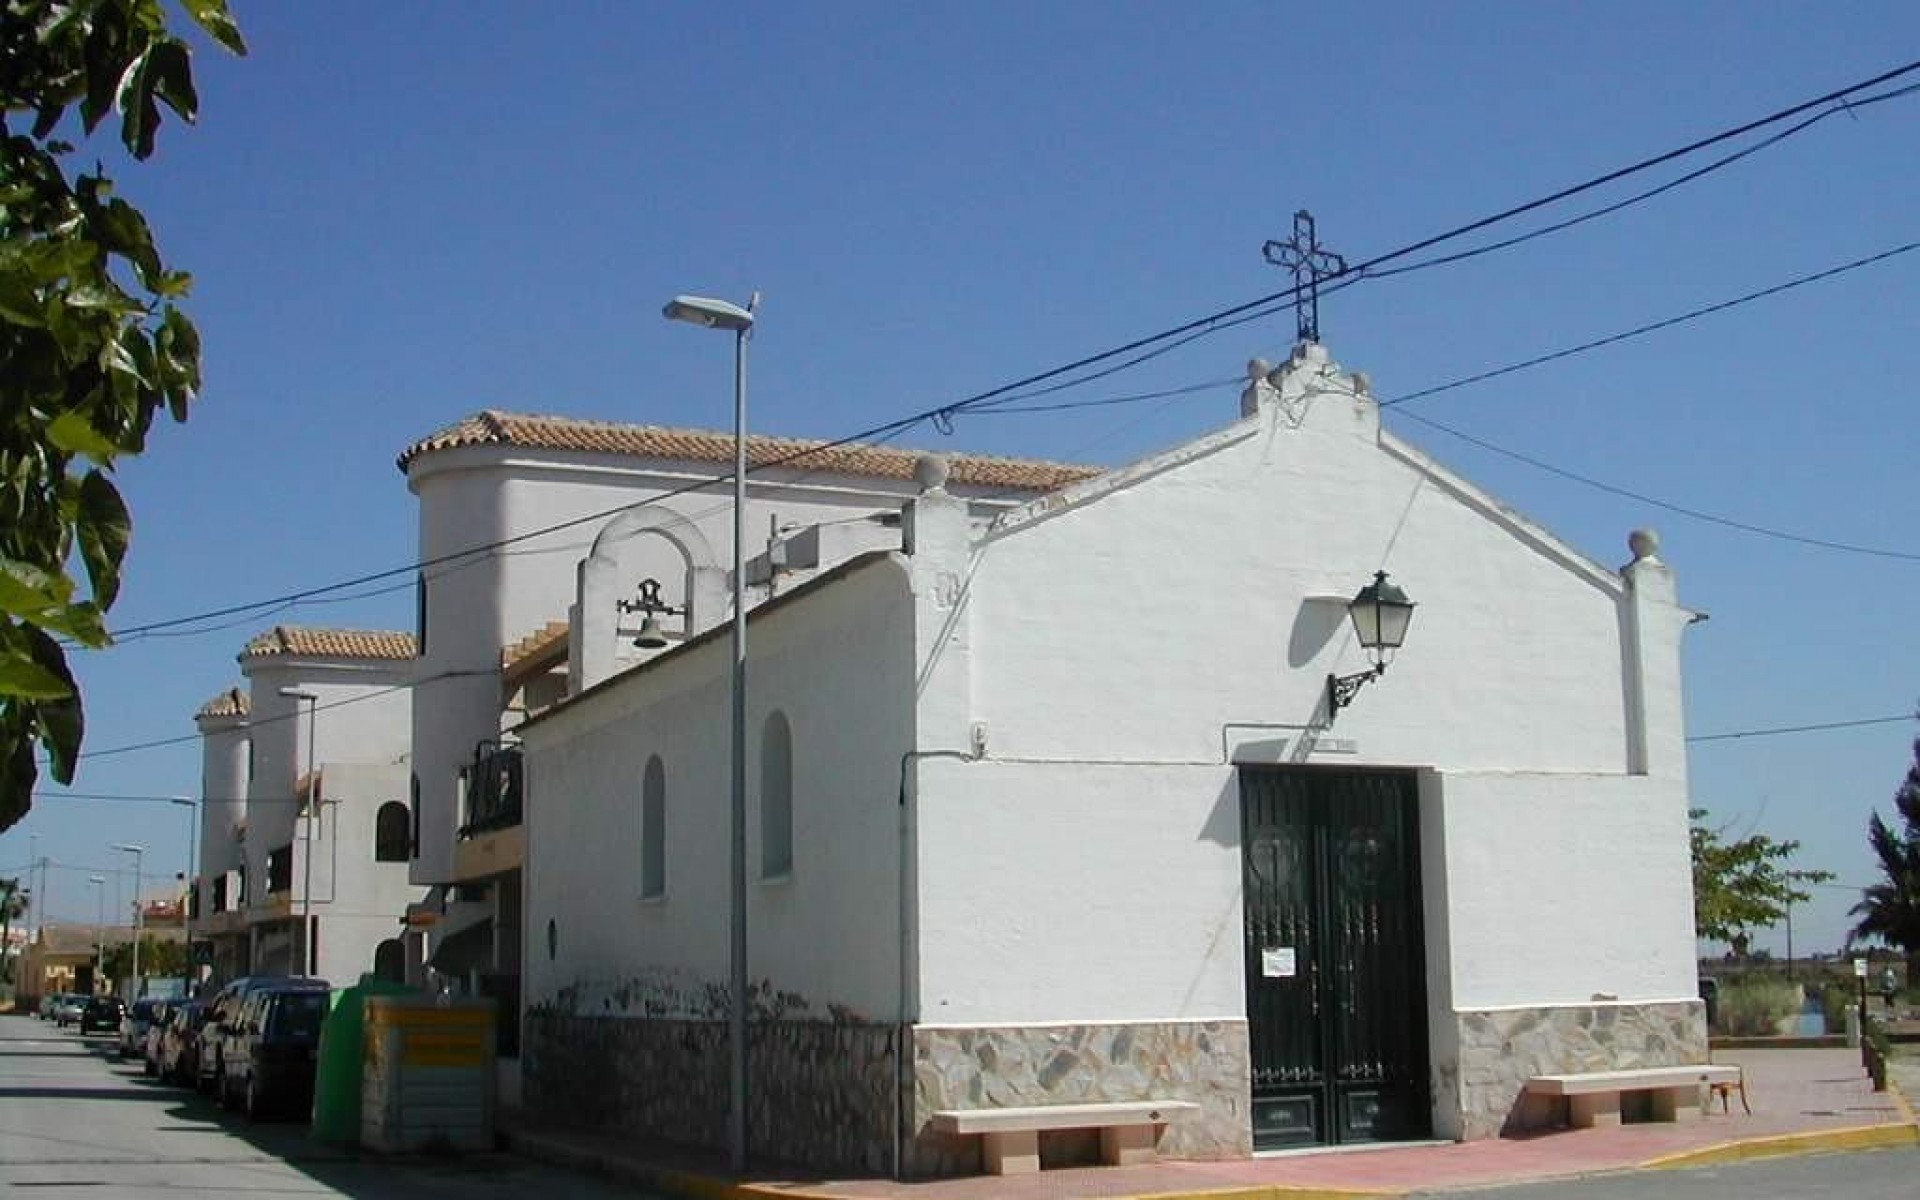 Nieuwbouw - Villa - Daya Nueva